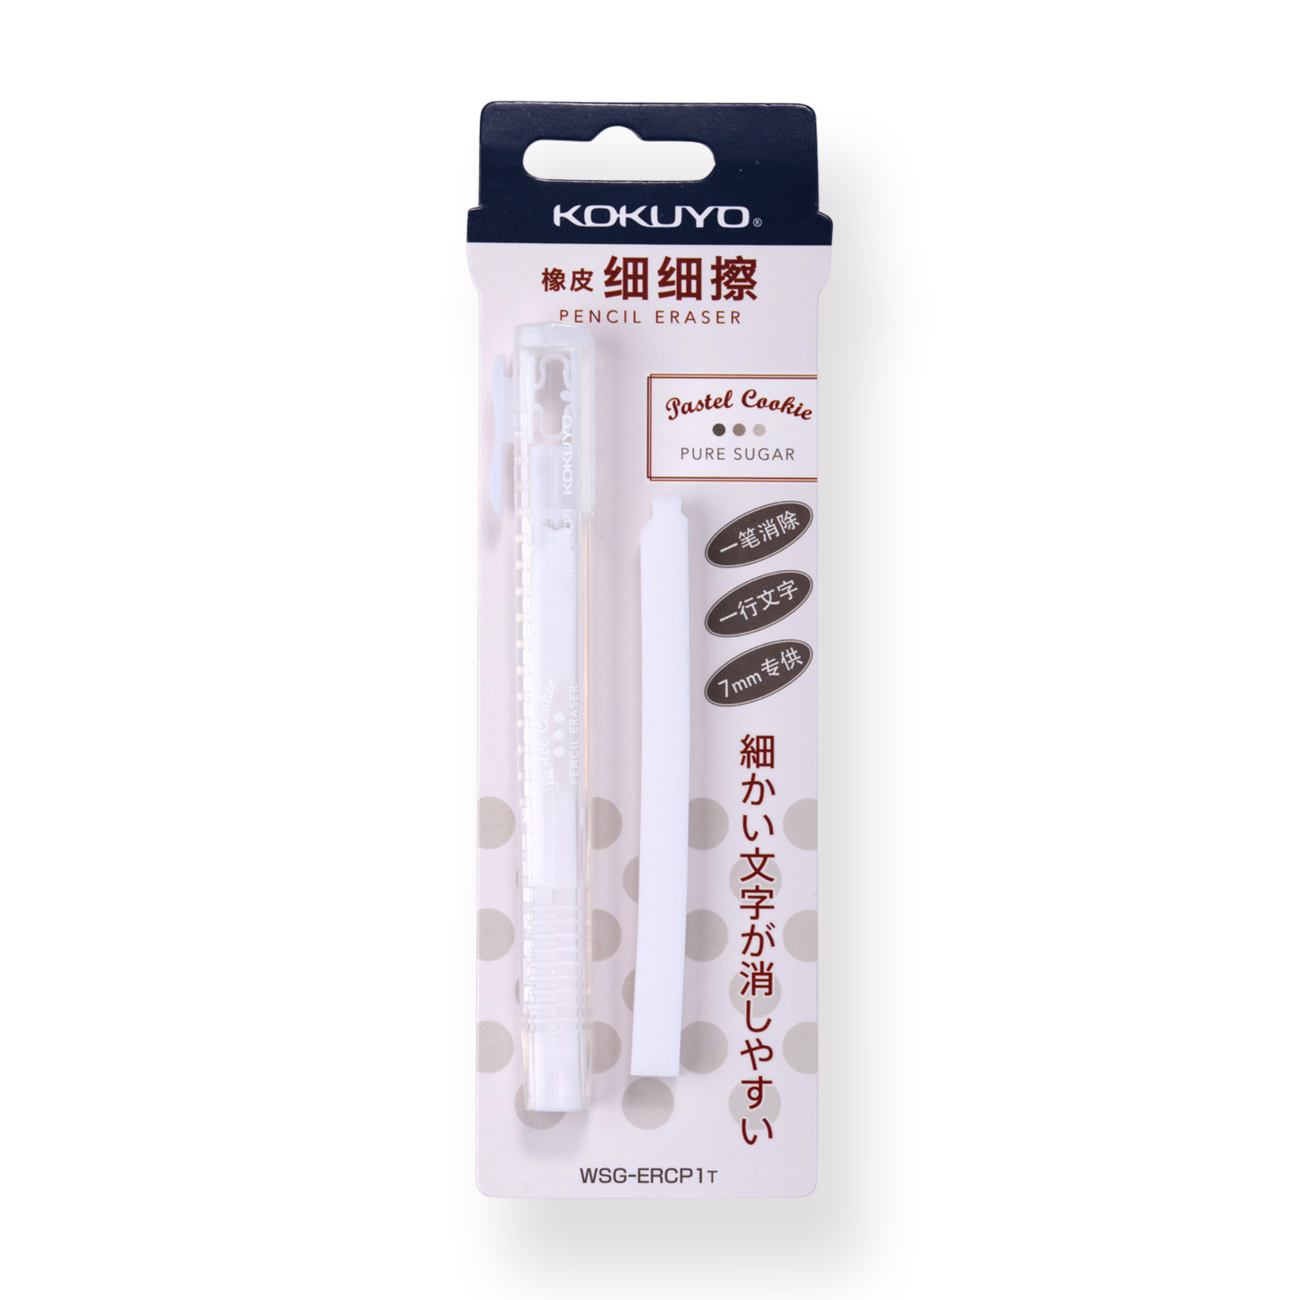 Kokuyo Pencil Eraser - Pure Sugar